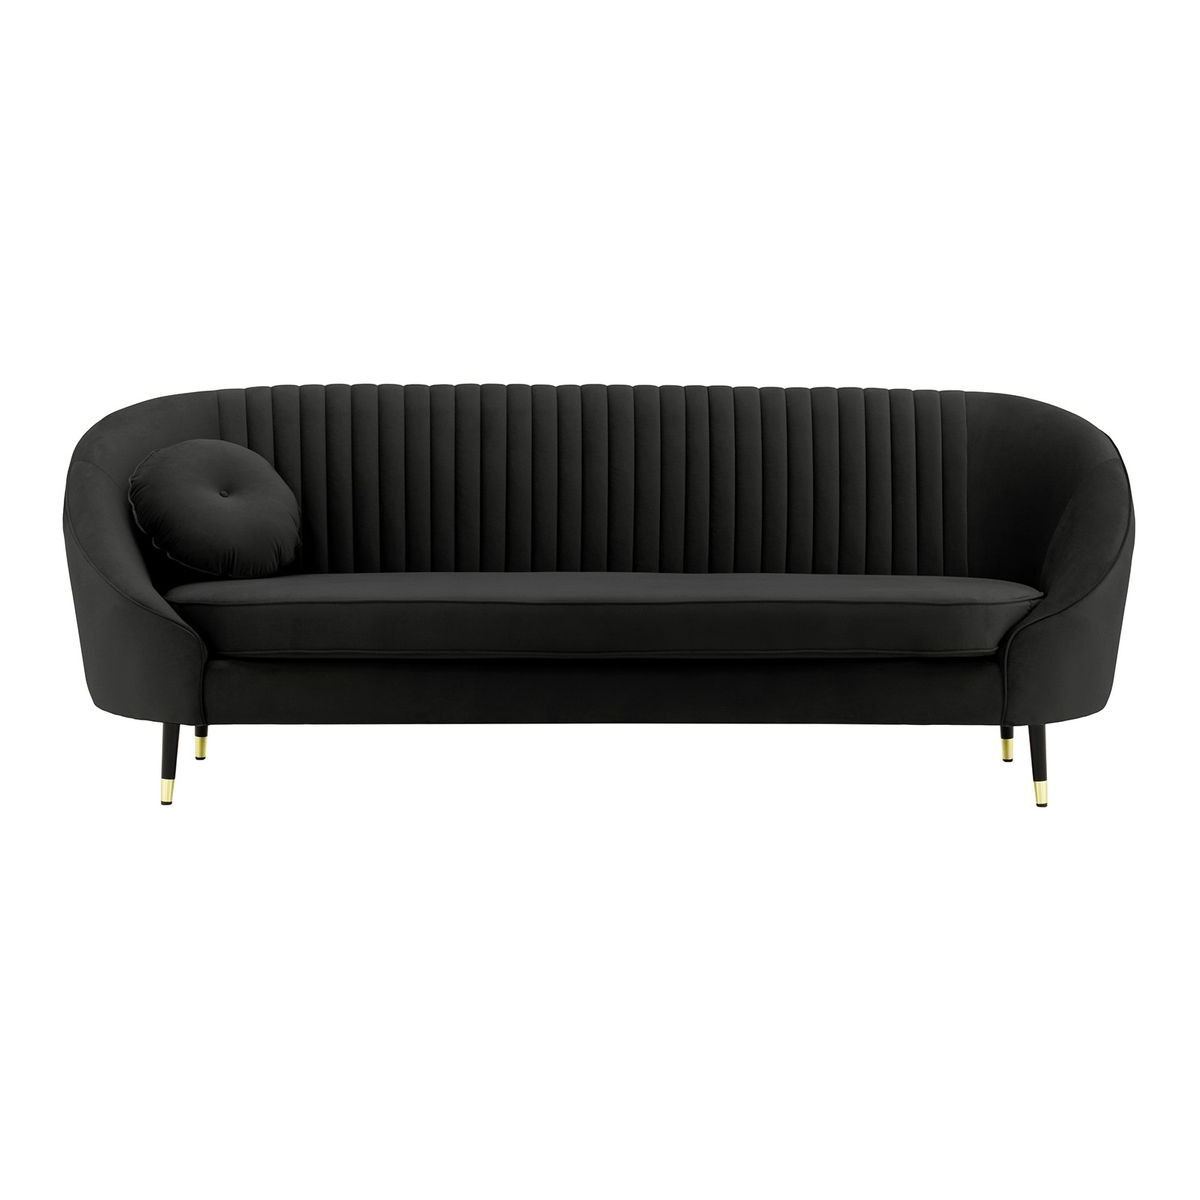 Kooper 3 Seater Sofa with stitching, black, Leg colour: Black + gold - image 1